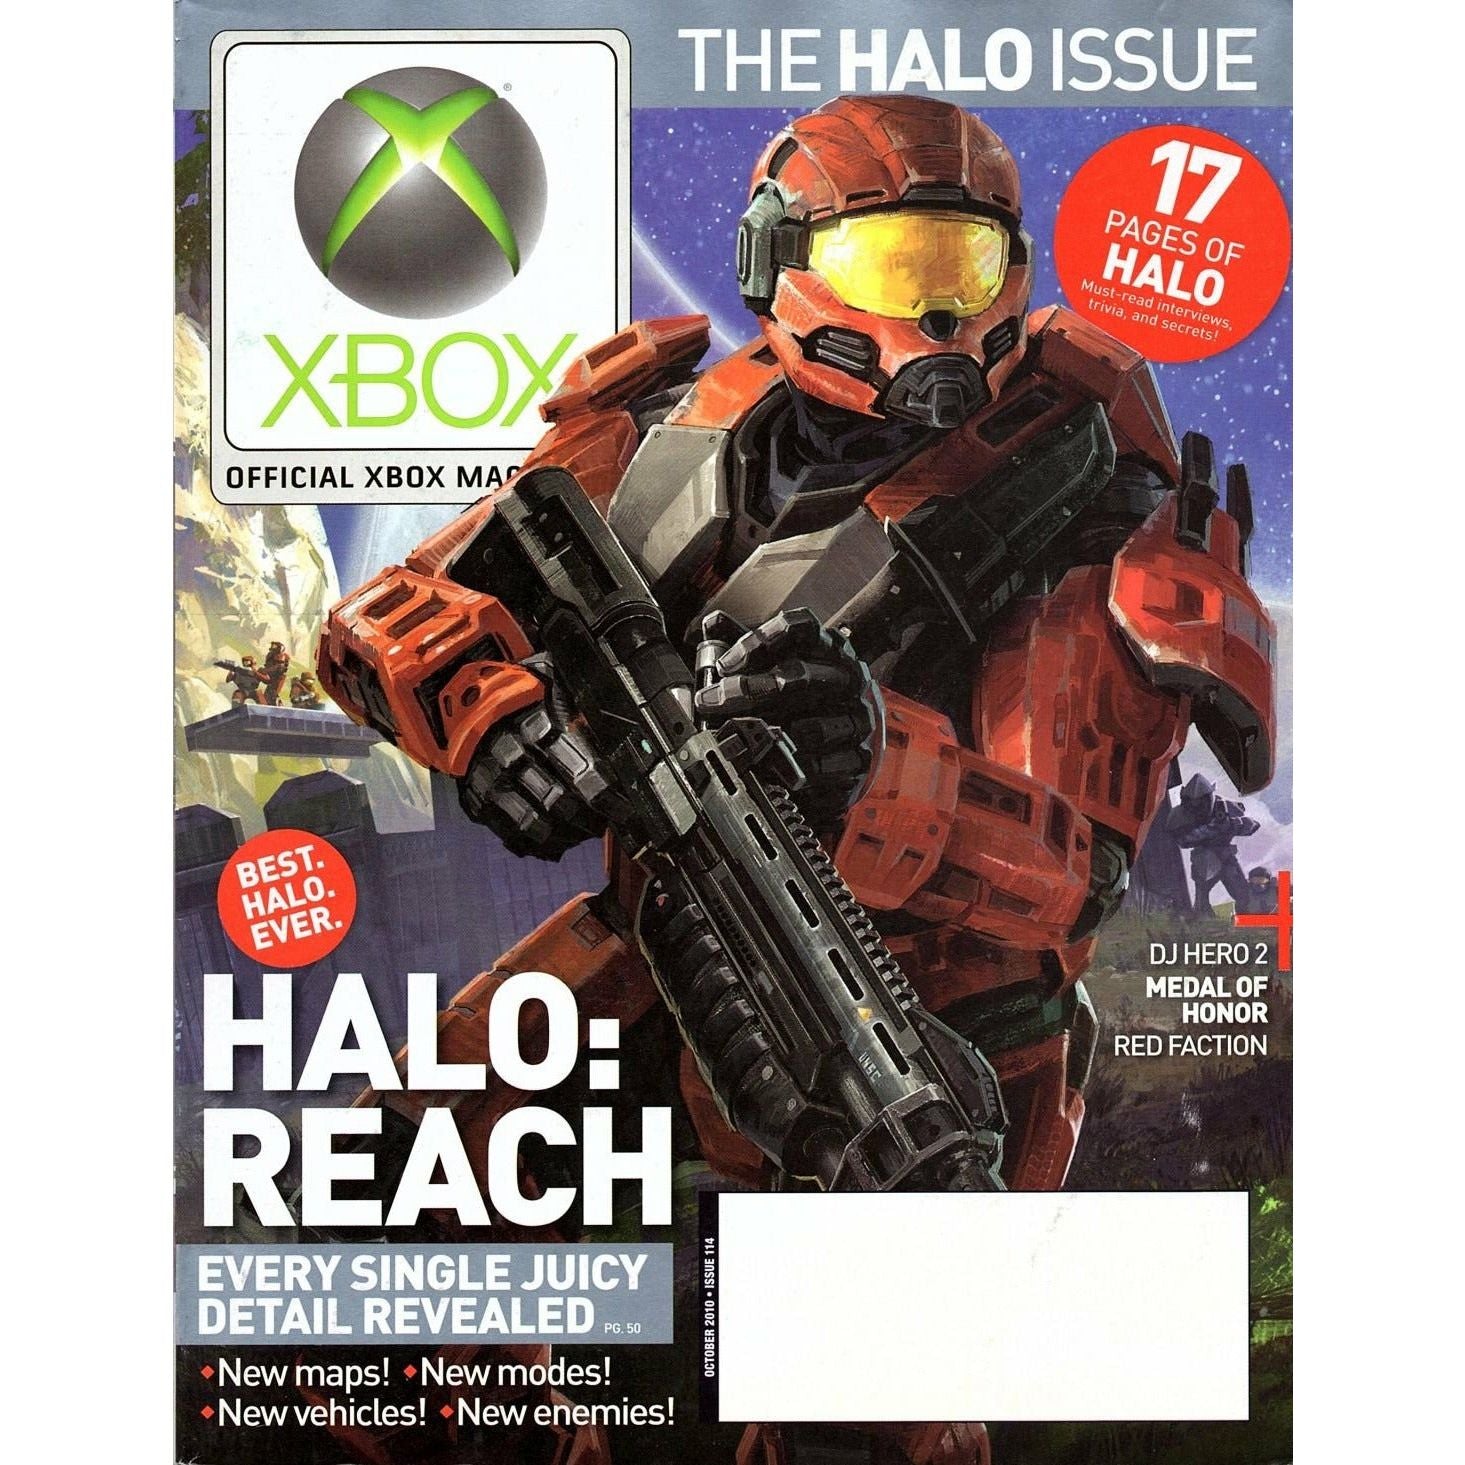 Official Xbox Magazine - Halo Reach - October 2010